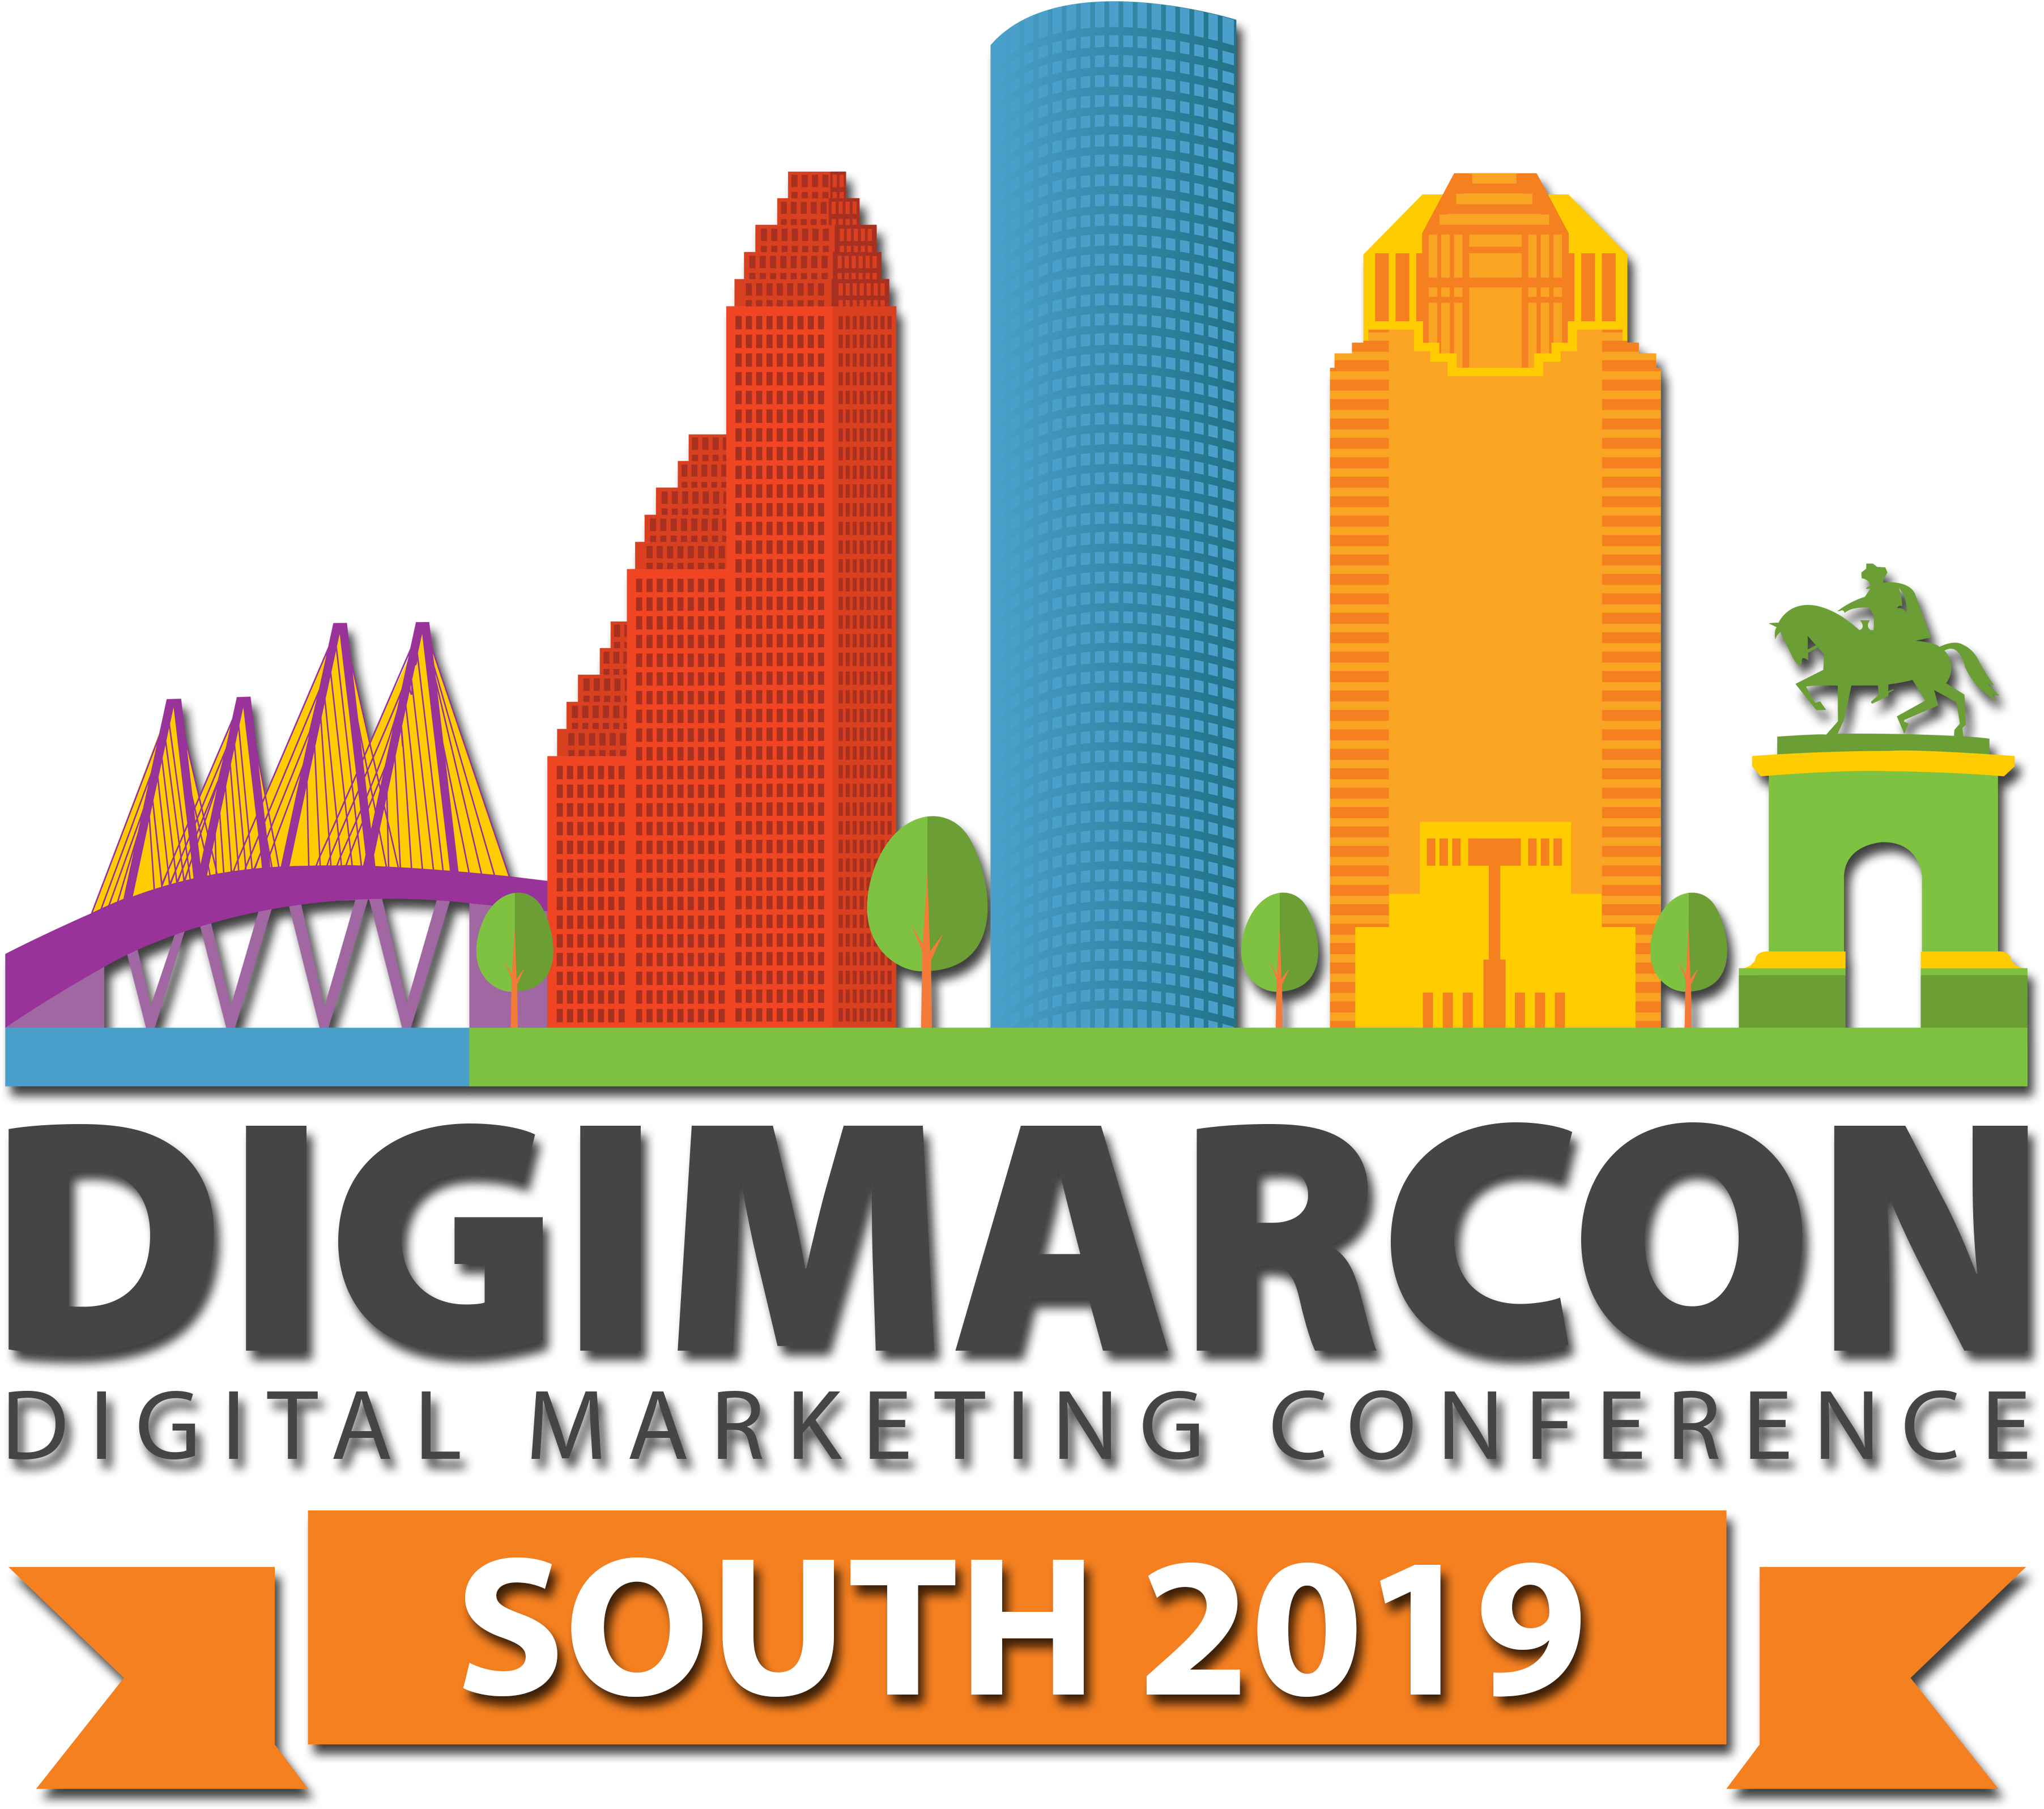 Digimarcon South 2019 Digital Marketing Conference - Digimarcon South 2019 Digital Marketing Conference (3800x3800)